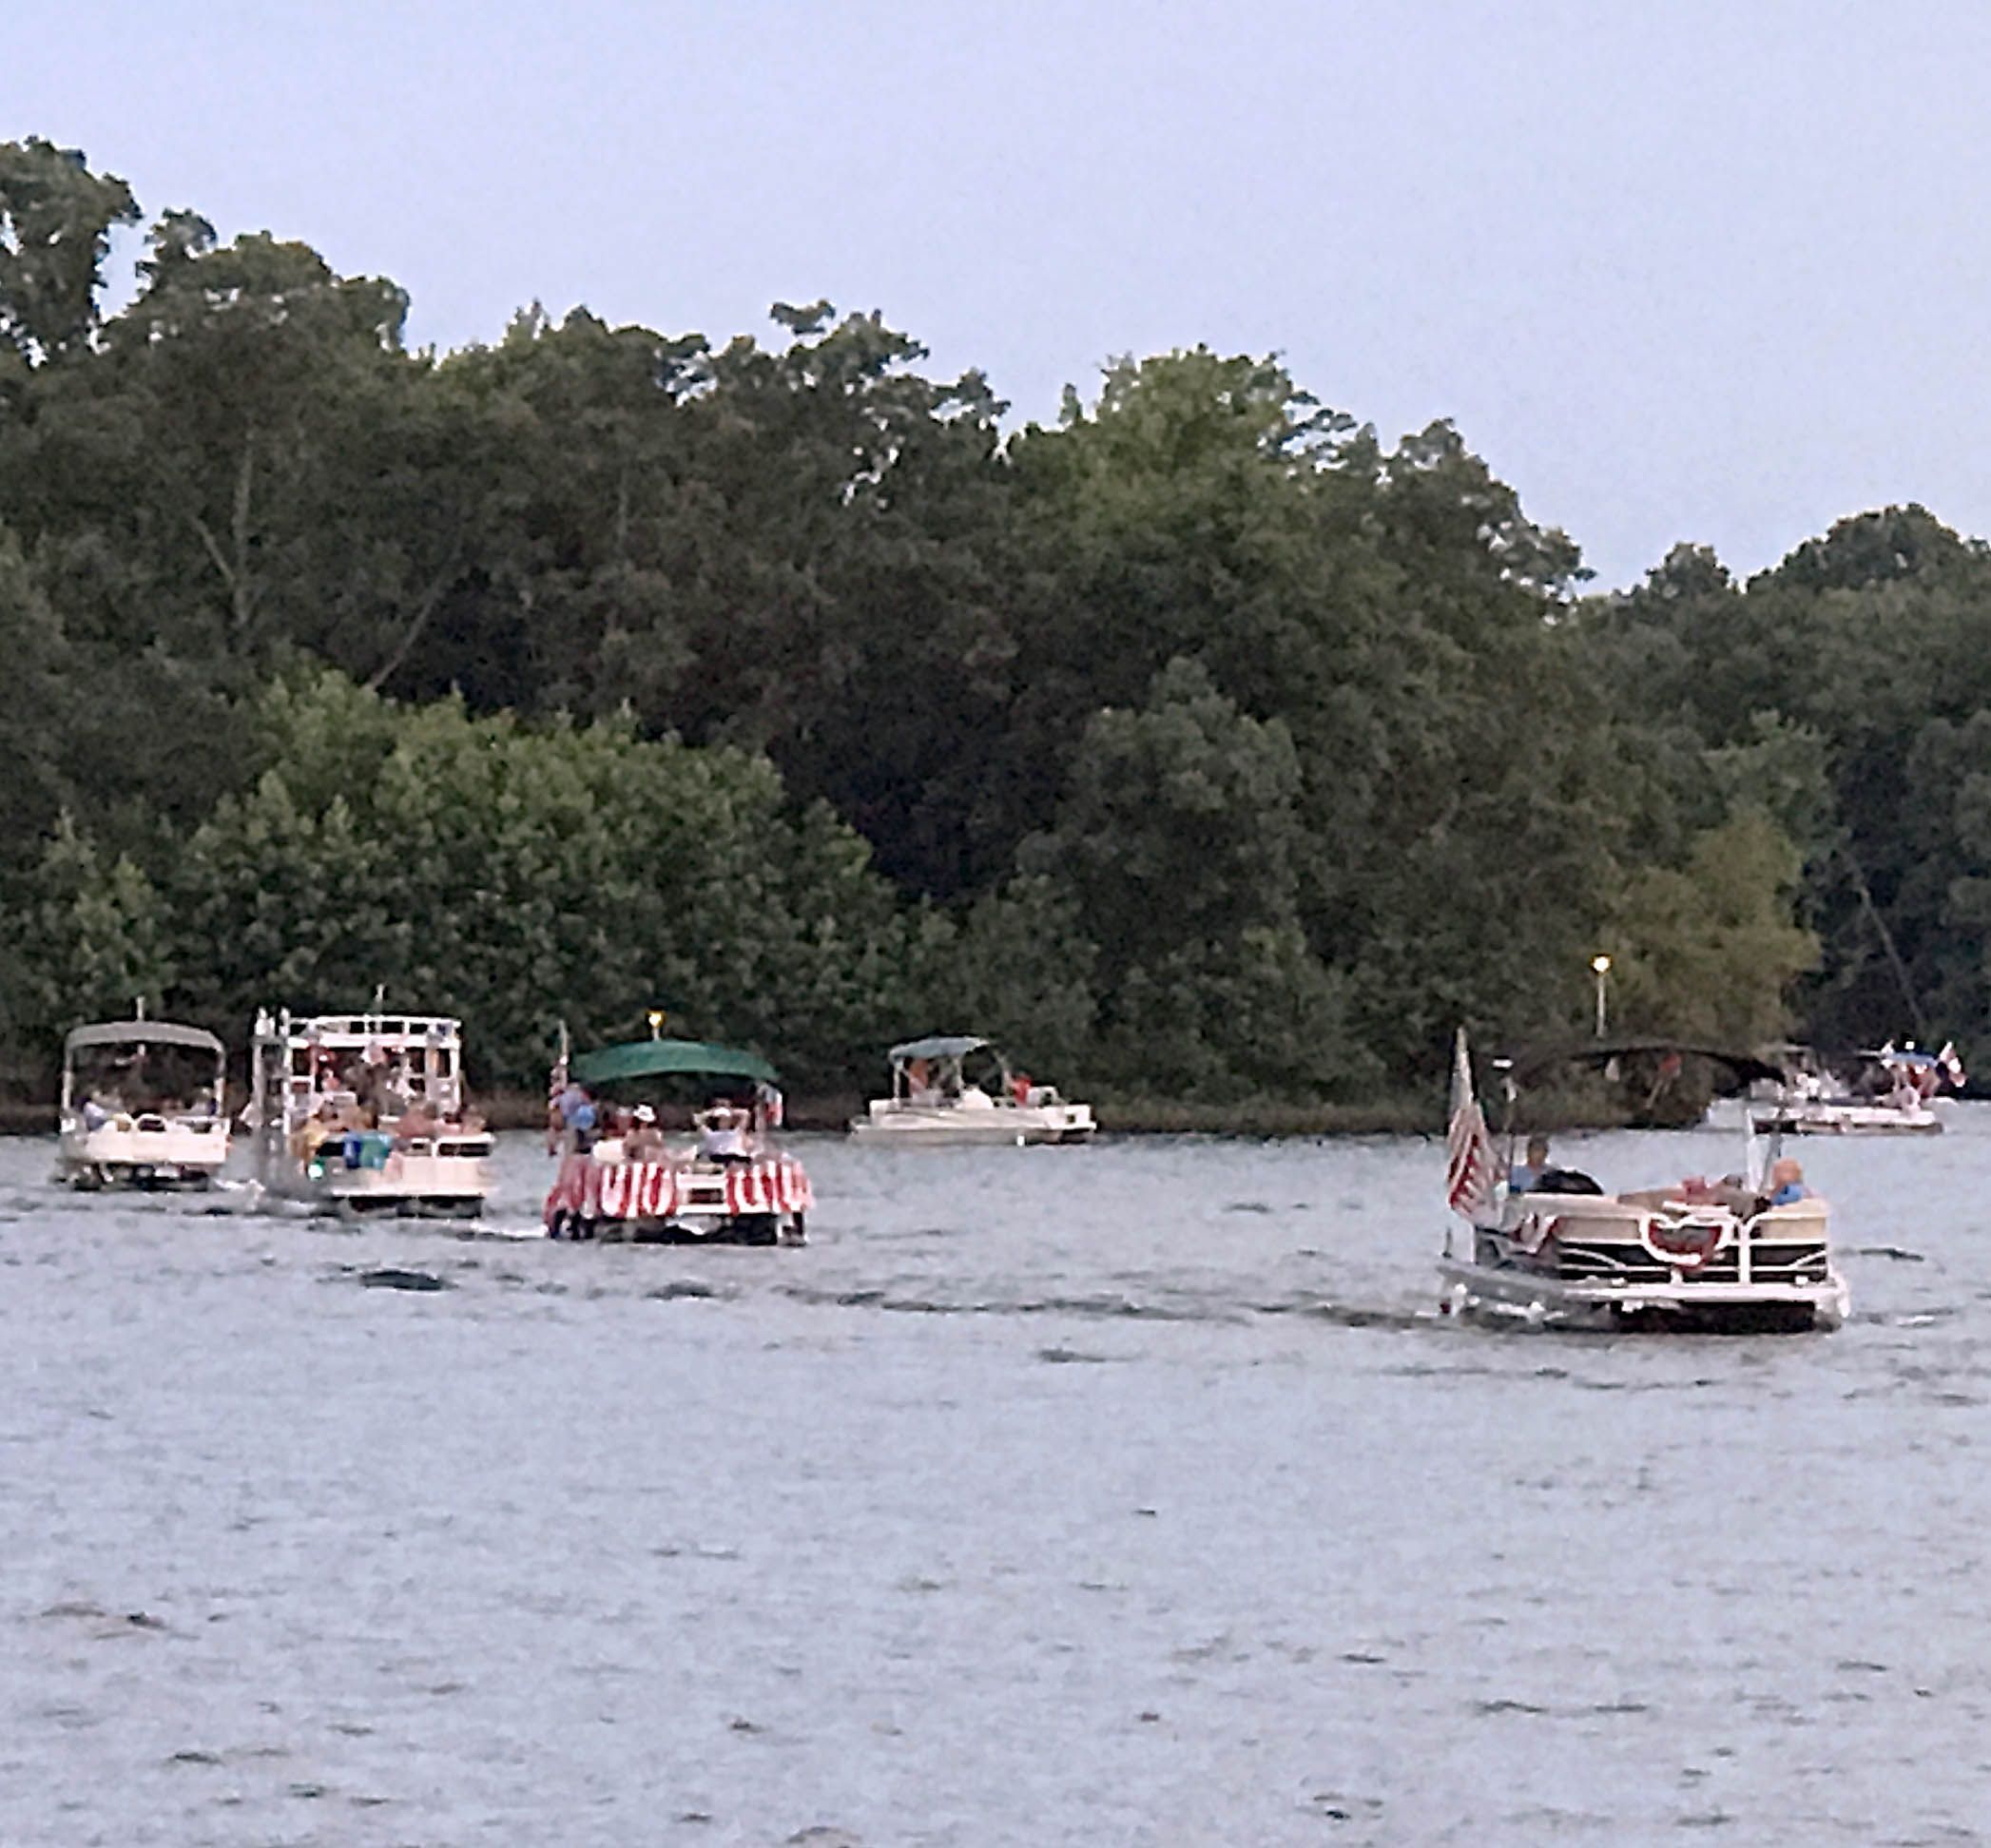 Pontoon Boats forming a parade on Garner Lake in Lakeland TN